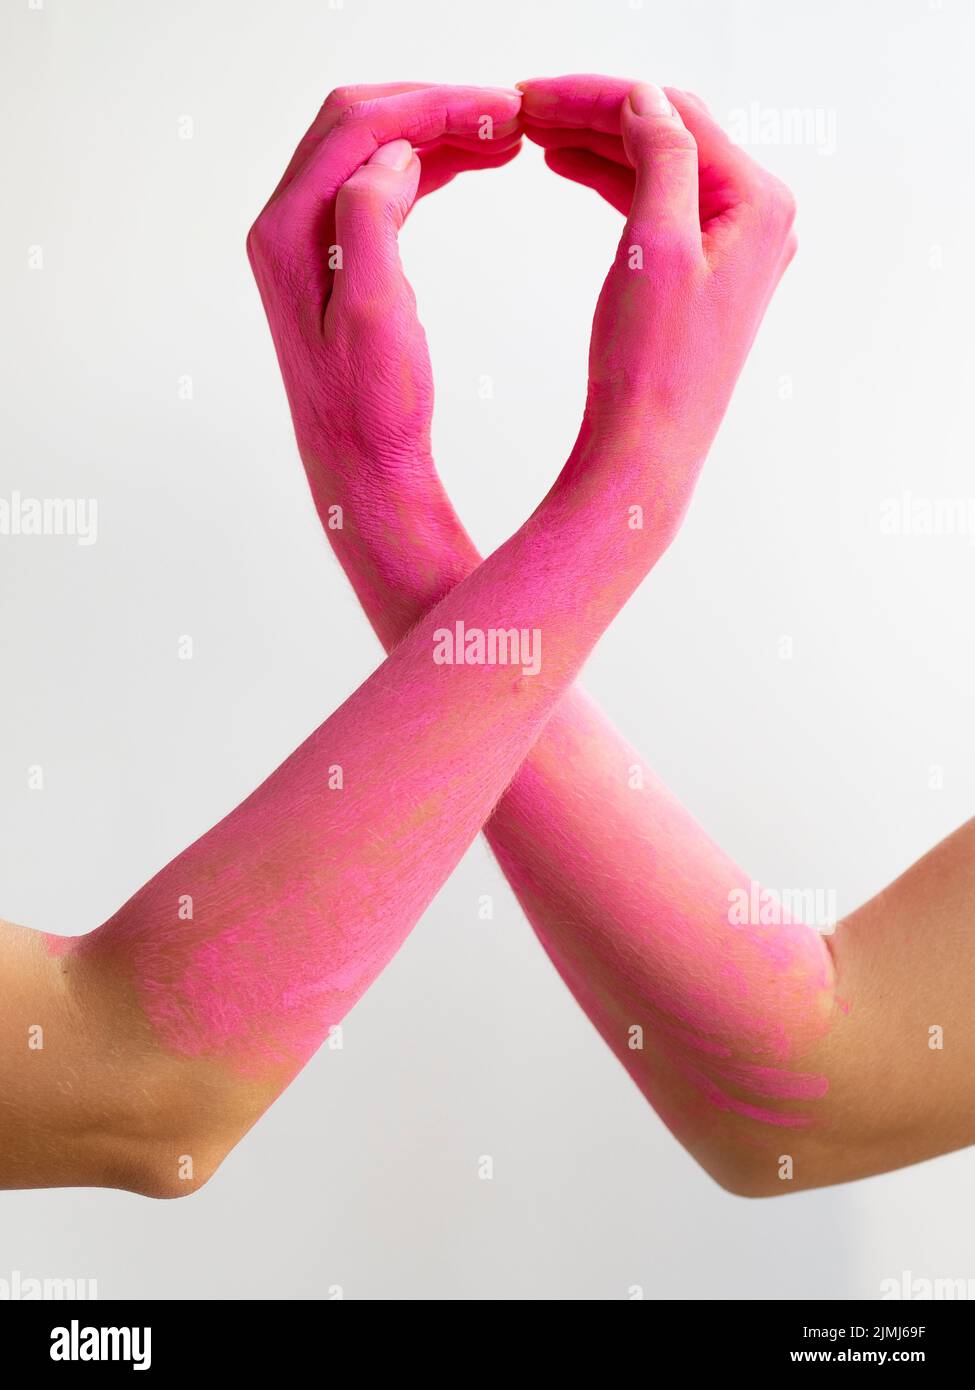 Nahaufnahme pinkfarbener Arme, die Bewusstsein ausdrücken Stockfoto